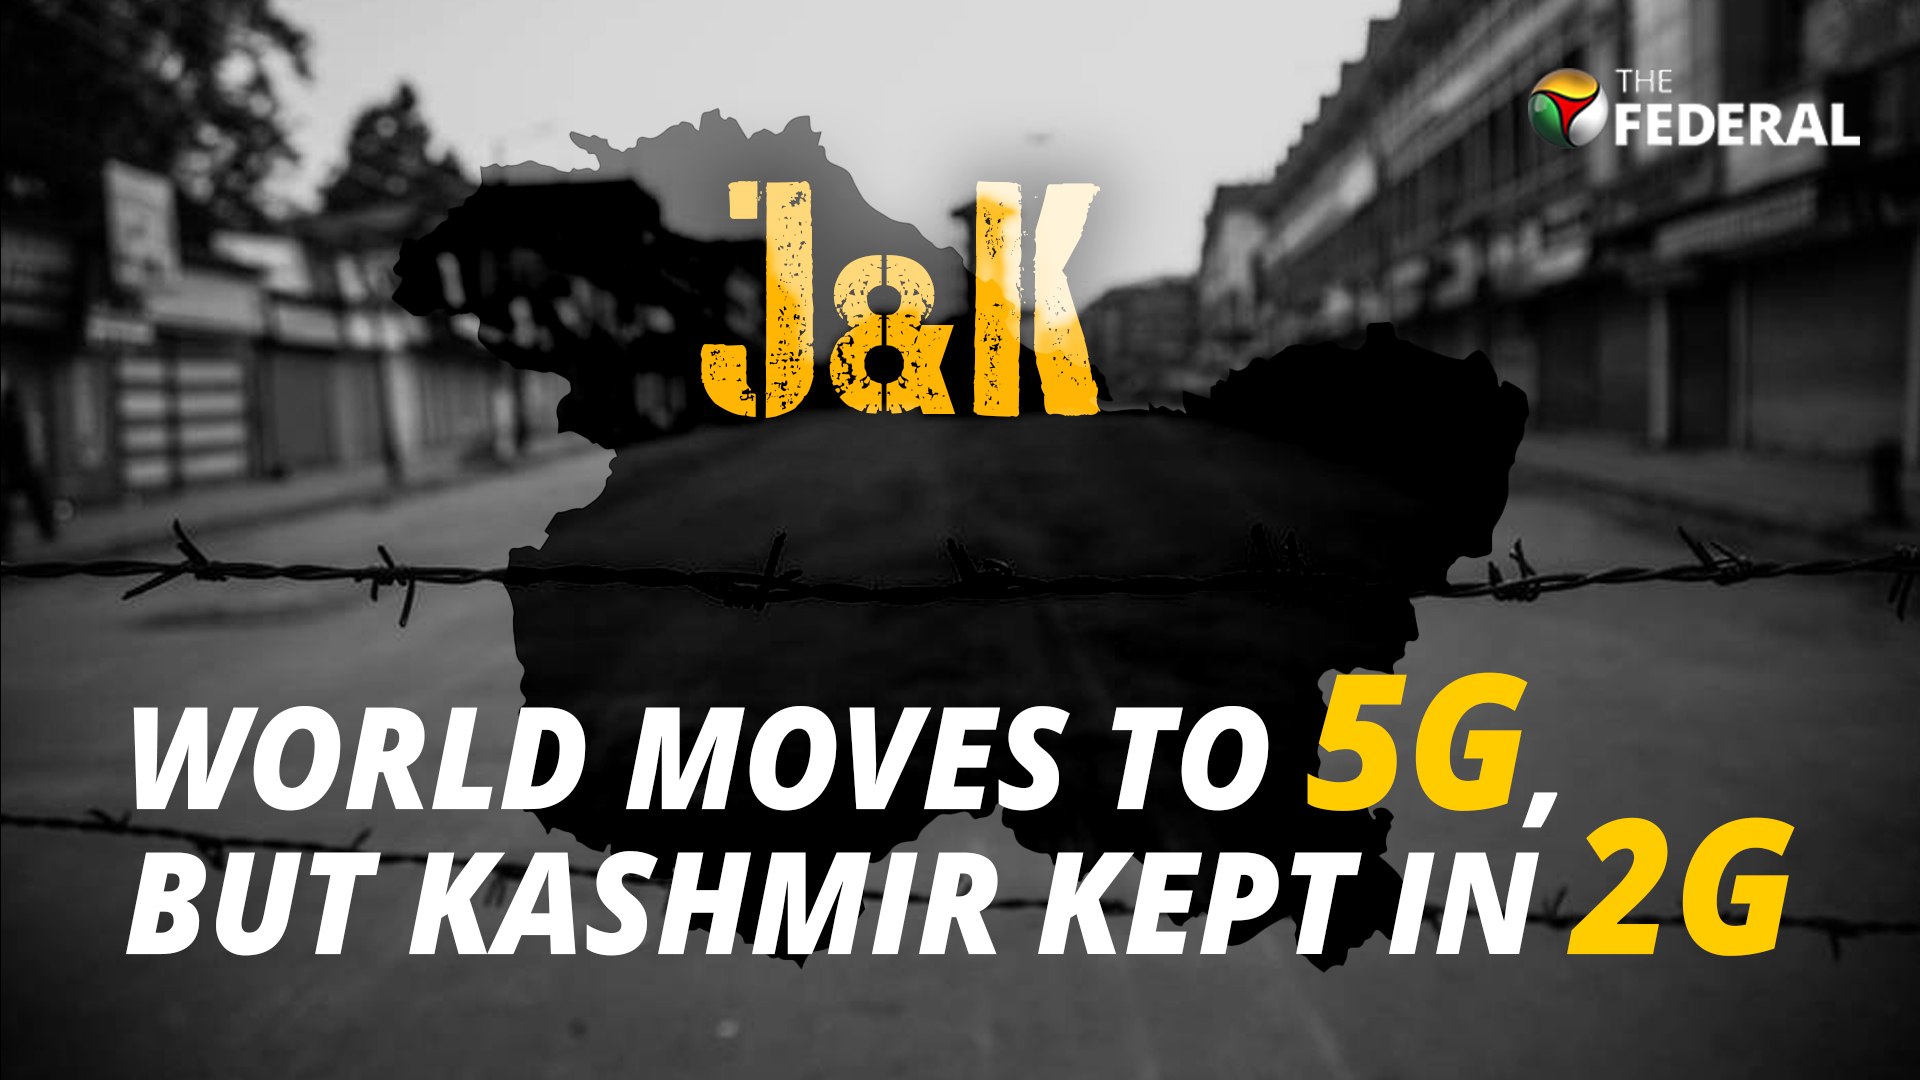 When world moves to 5G, Kashmir kept in 2G